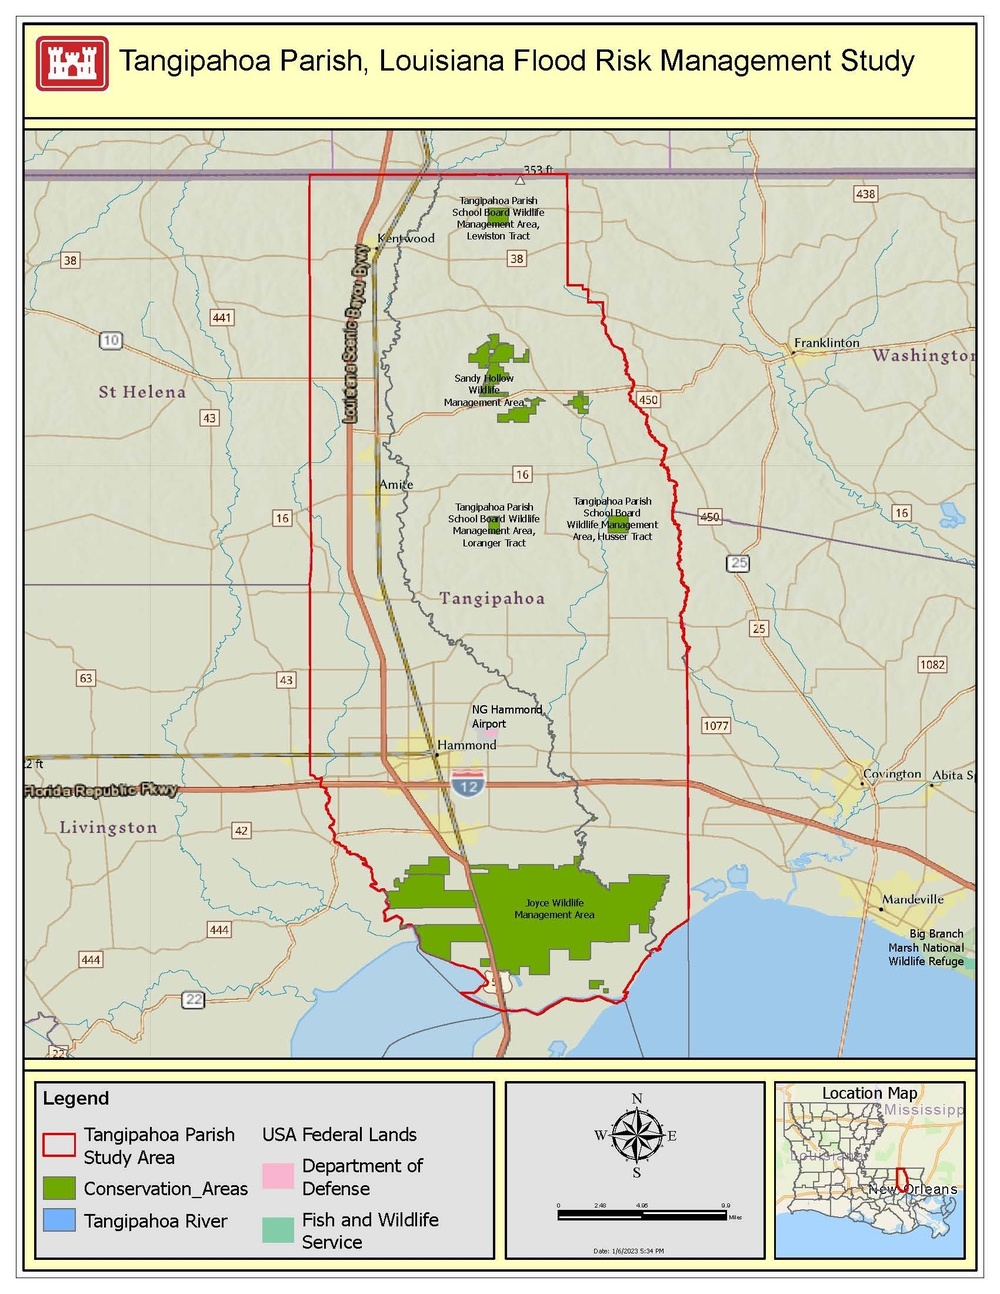 Tangipahoa Parish, Louisiana Feasibility Study open houses scheduled